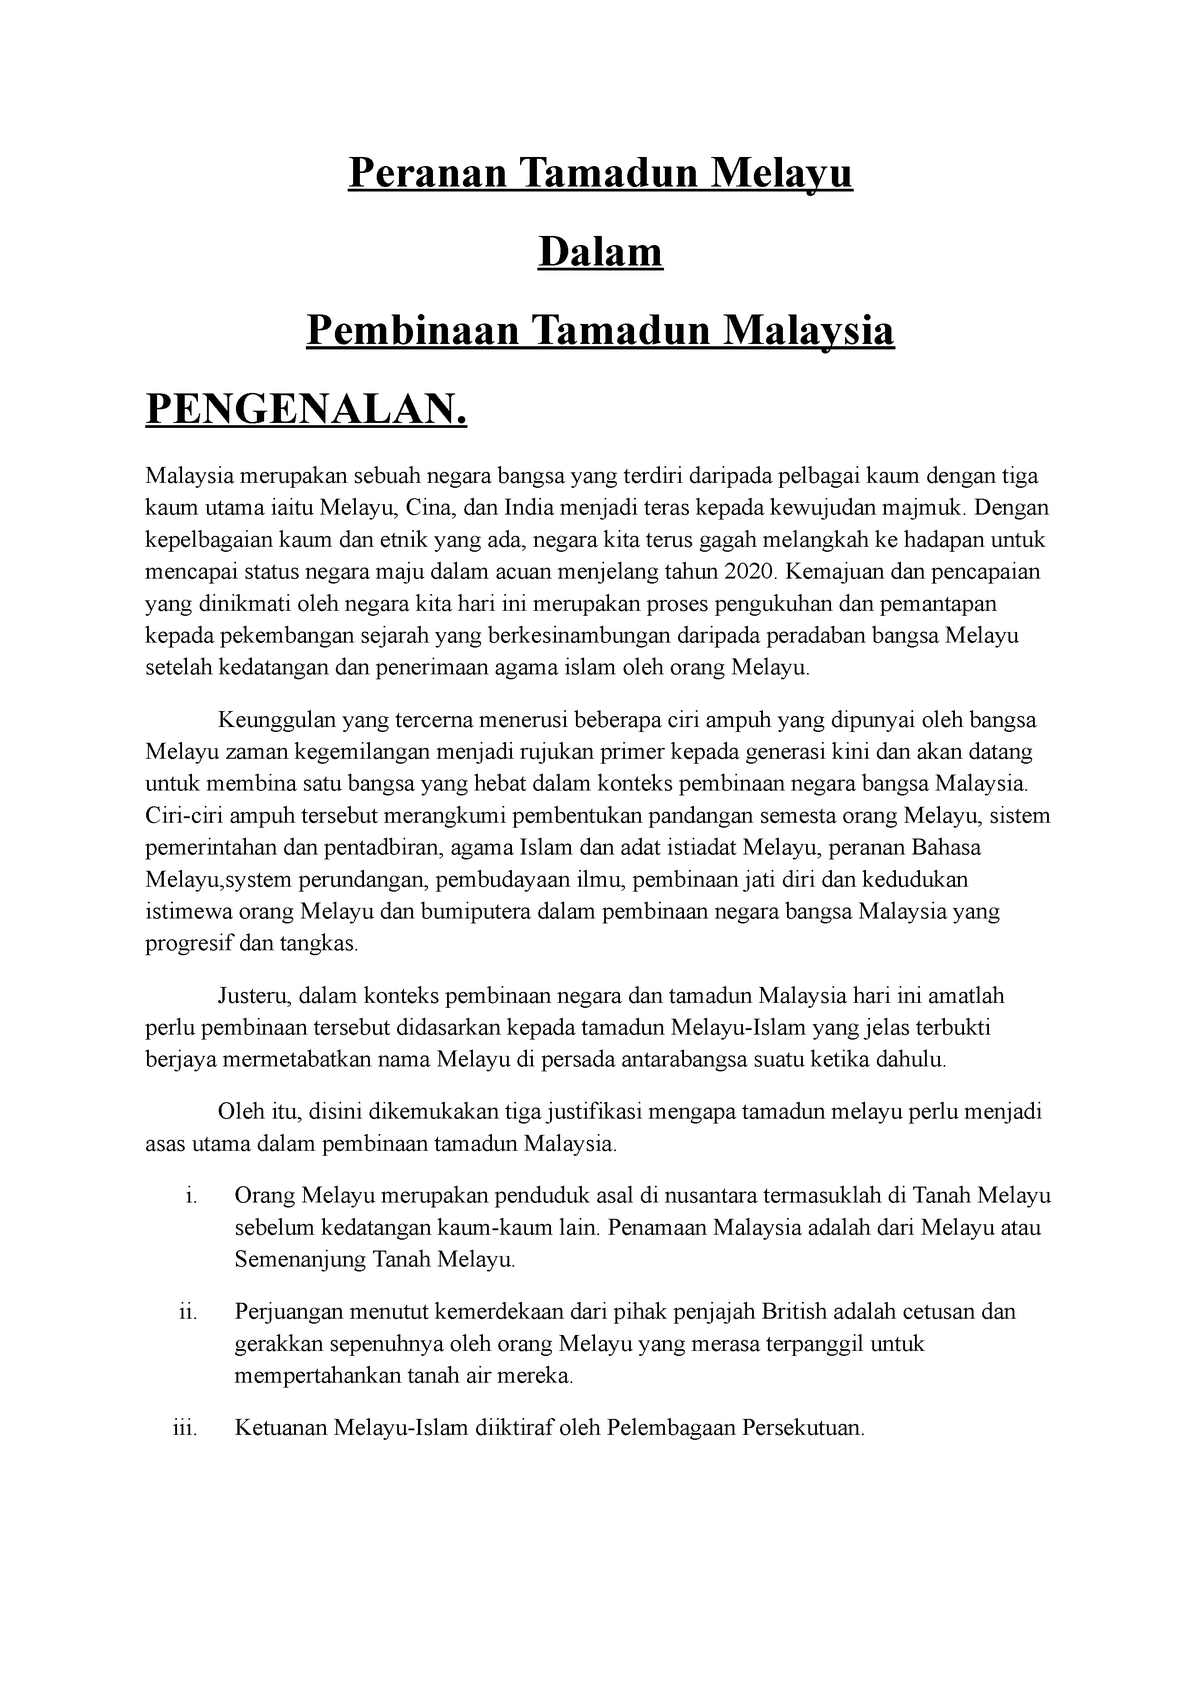 8173505 Peranan Tamadun Melayu Dalam Membina Tamadun Malaysia 